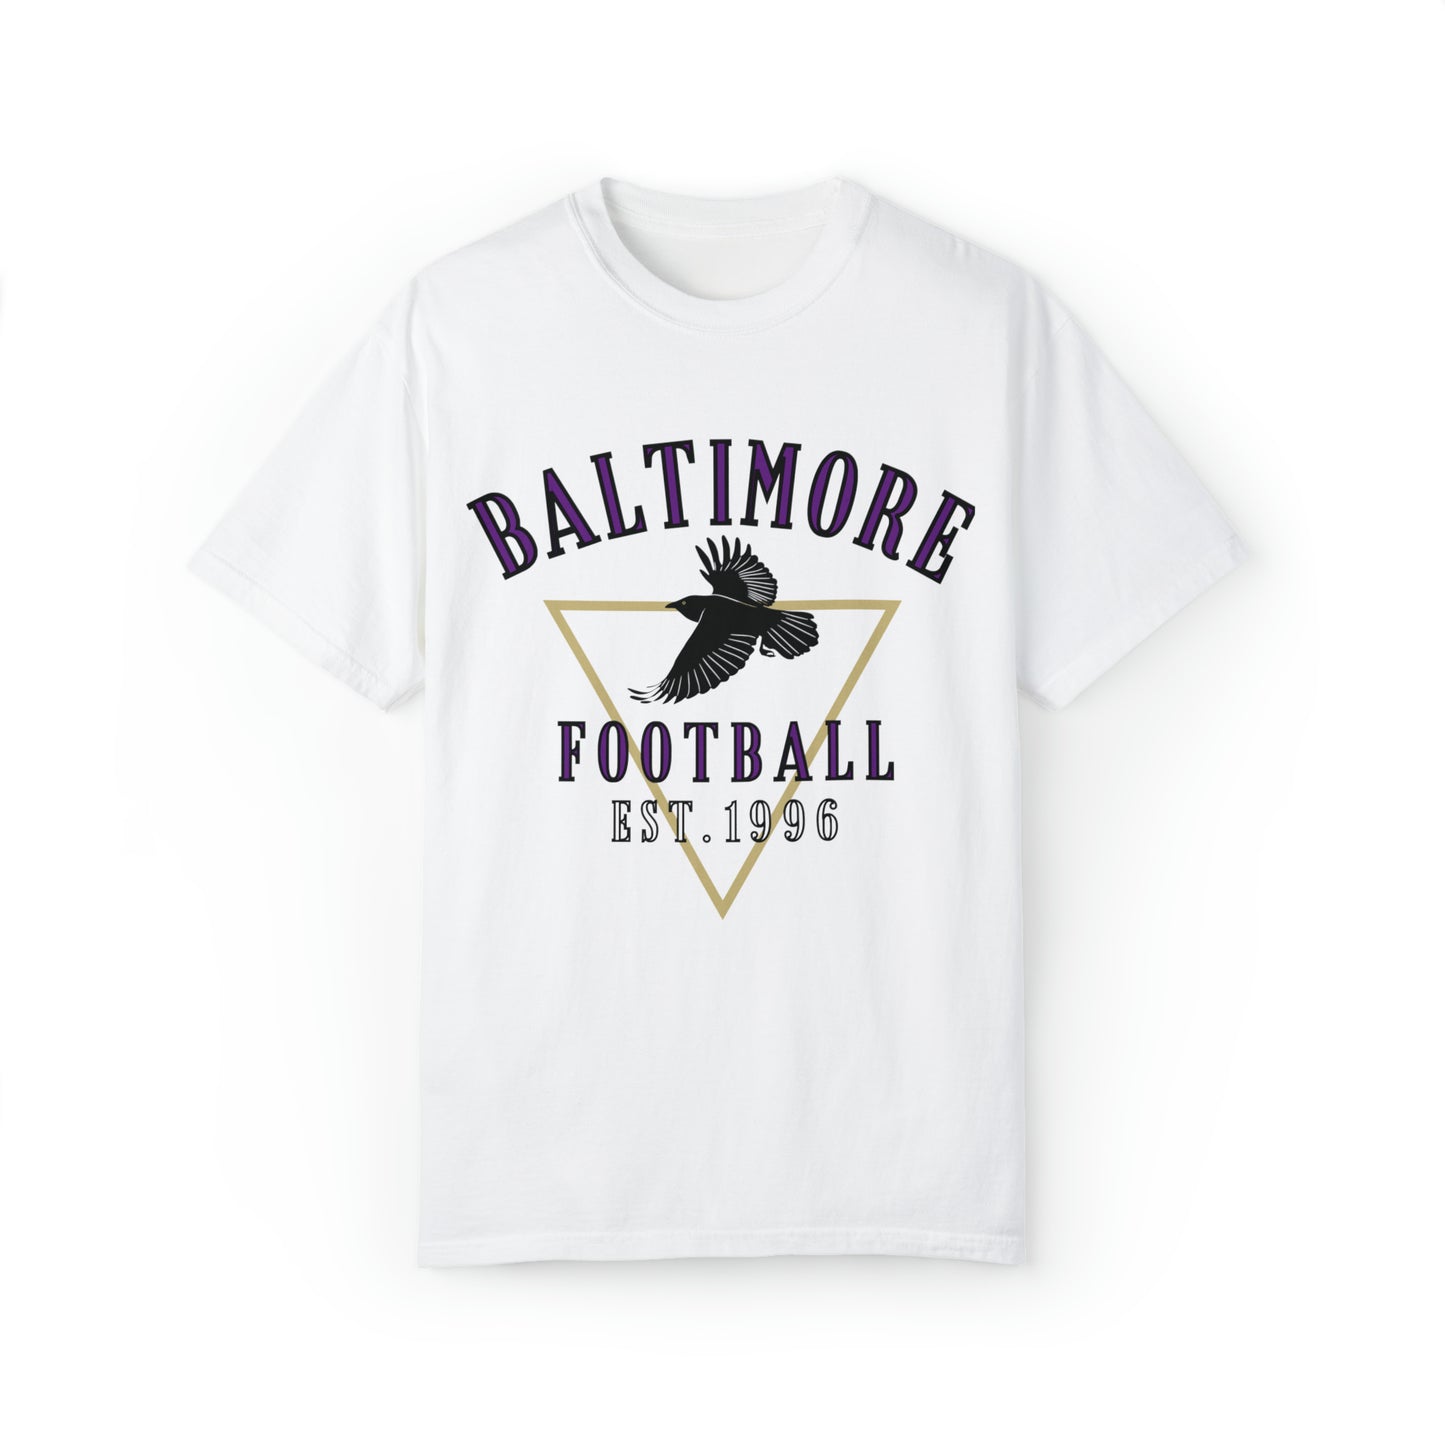 Baltimore Ravens T-Shirt  - Vintage Short Sleeve Tee - Comfort Colors Oversized Men's Women's Apparel - Design 3